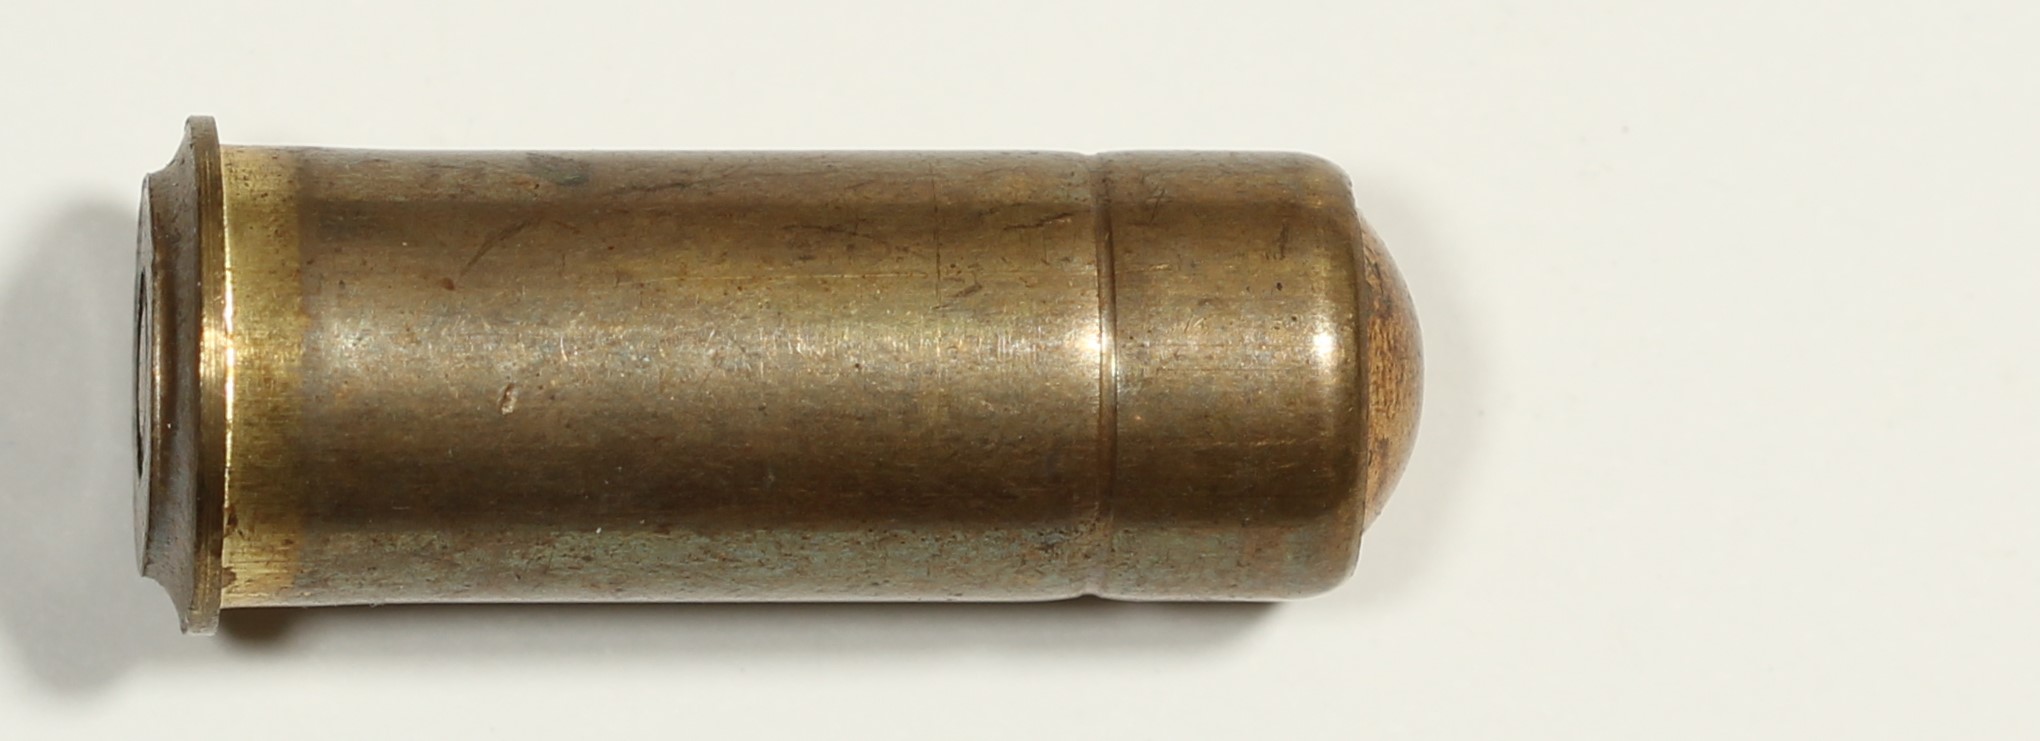 ./ammo/fangstredning/patroner/Patron-12mm-drivpatron-Xgram-1976-1.JPG